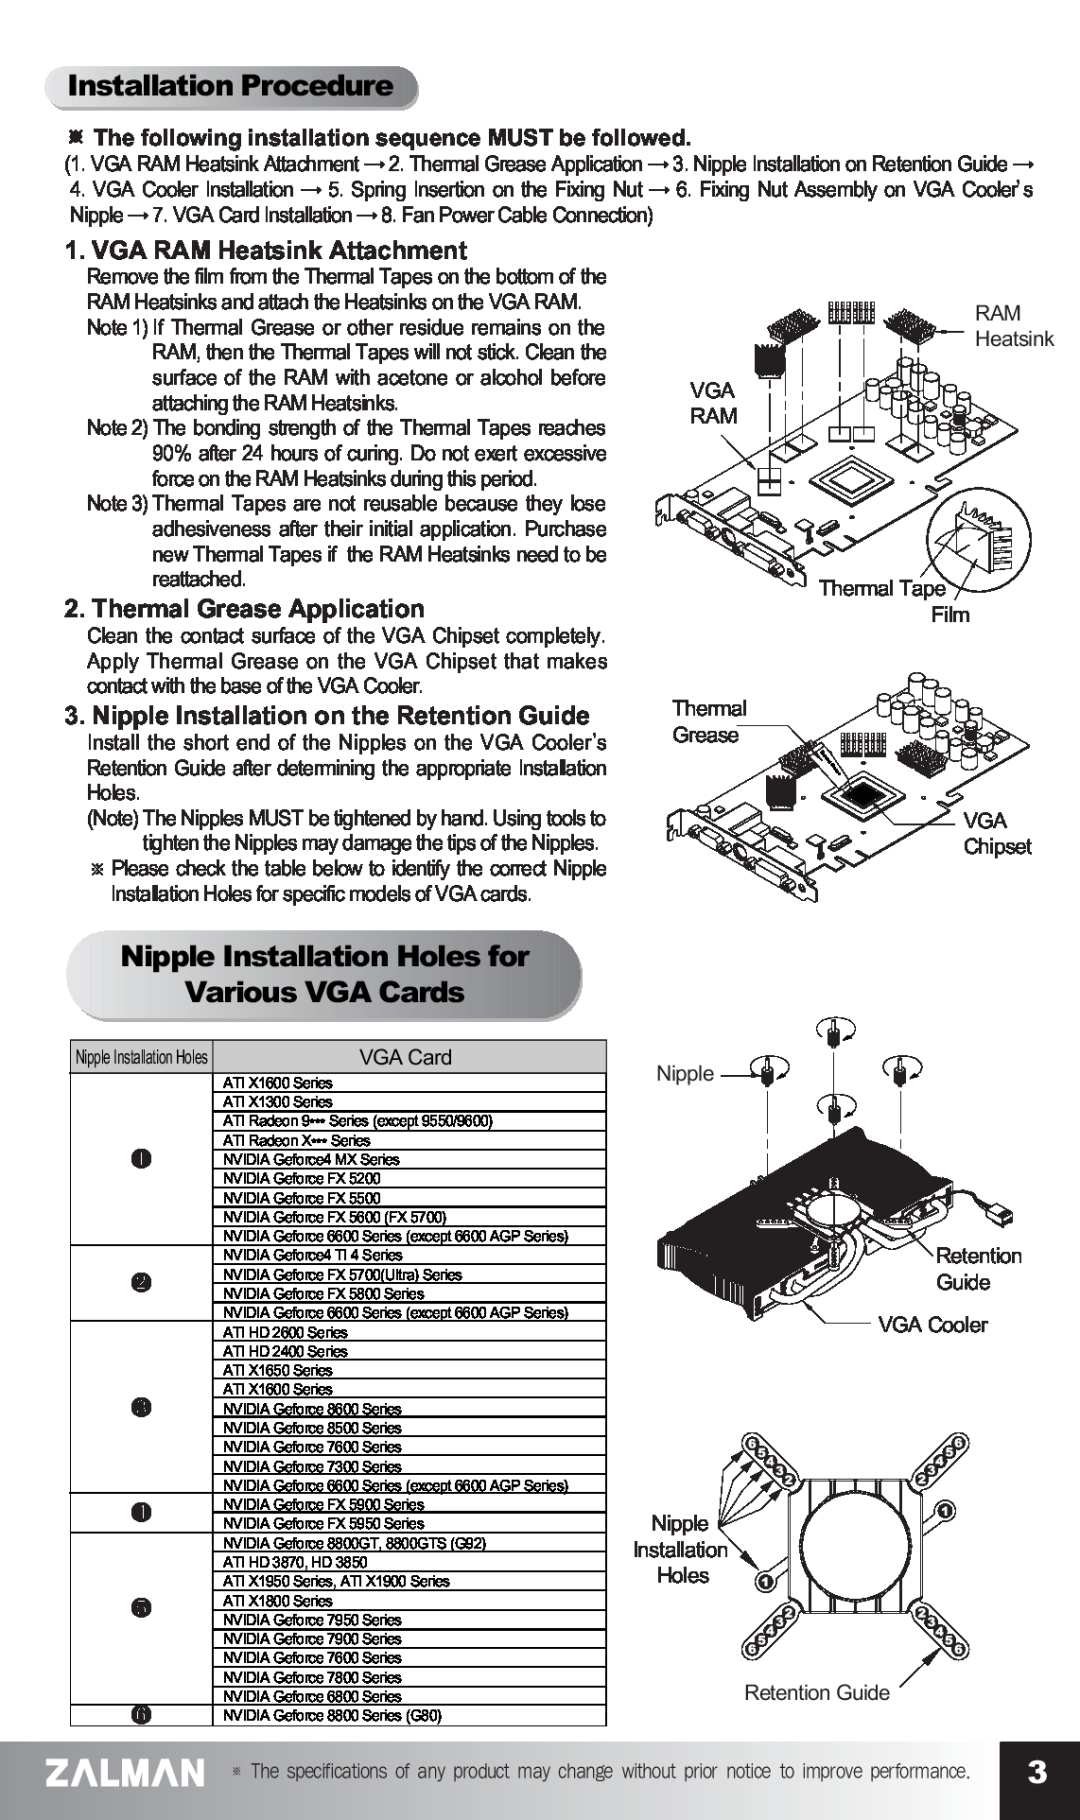 ZALMAN GV1000 manual InstallationProcedure, Nipple Installation Holes for Various VGA Cards, VGA RAM Heatsink Attachment 